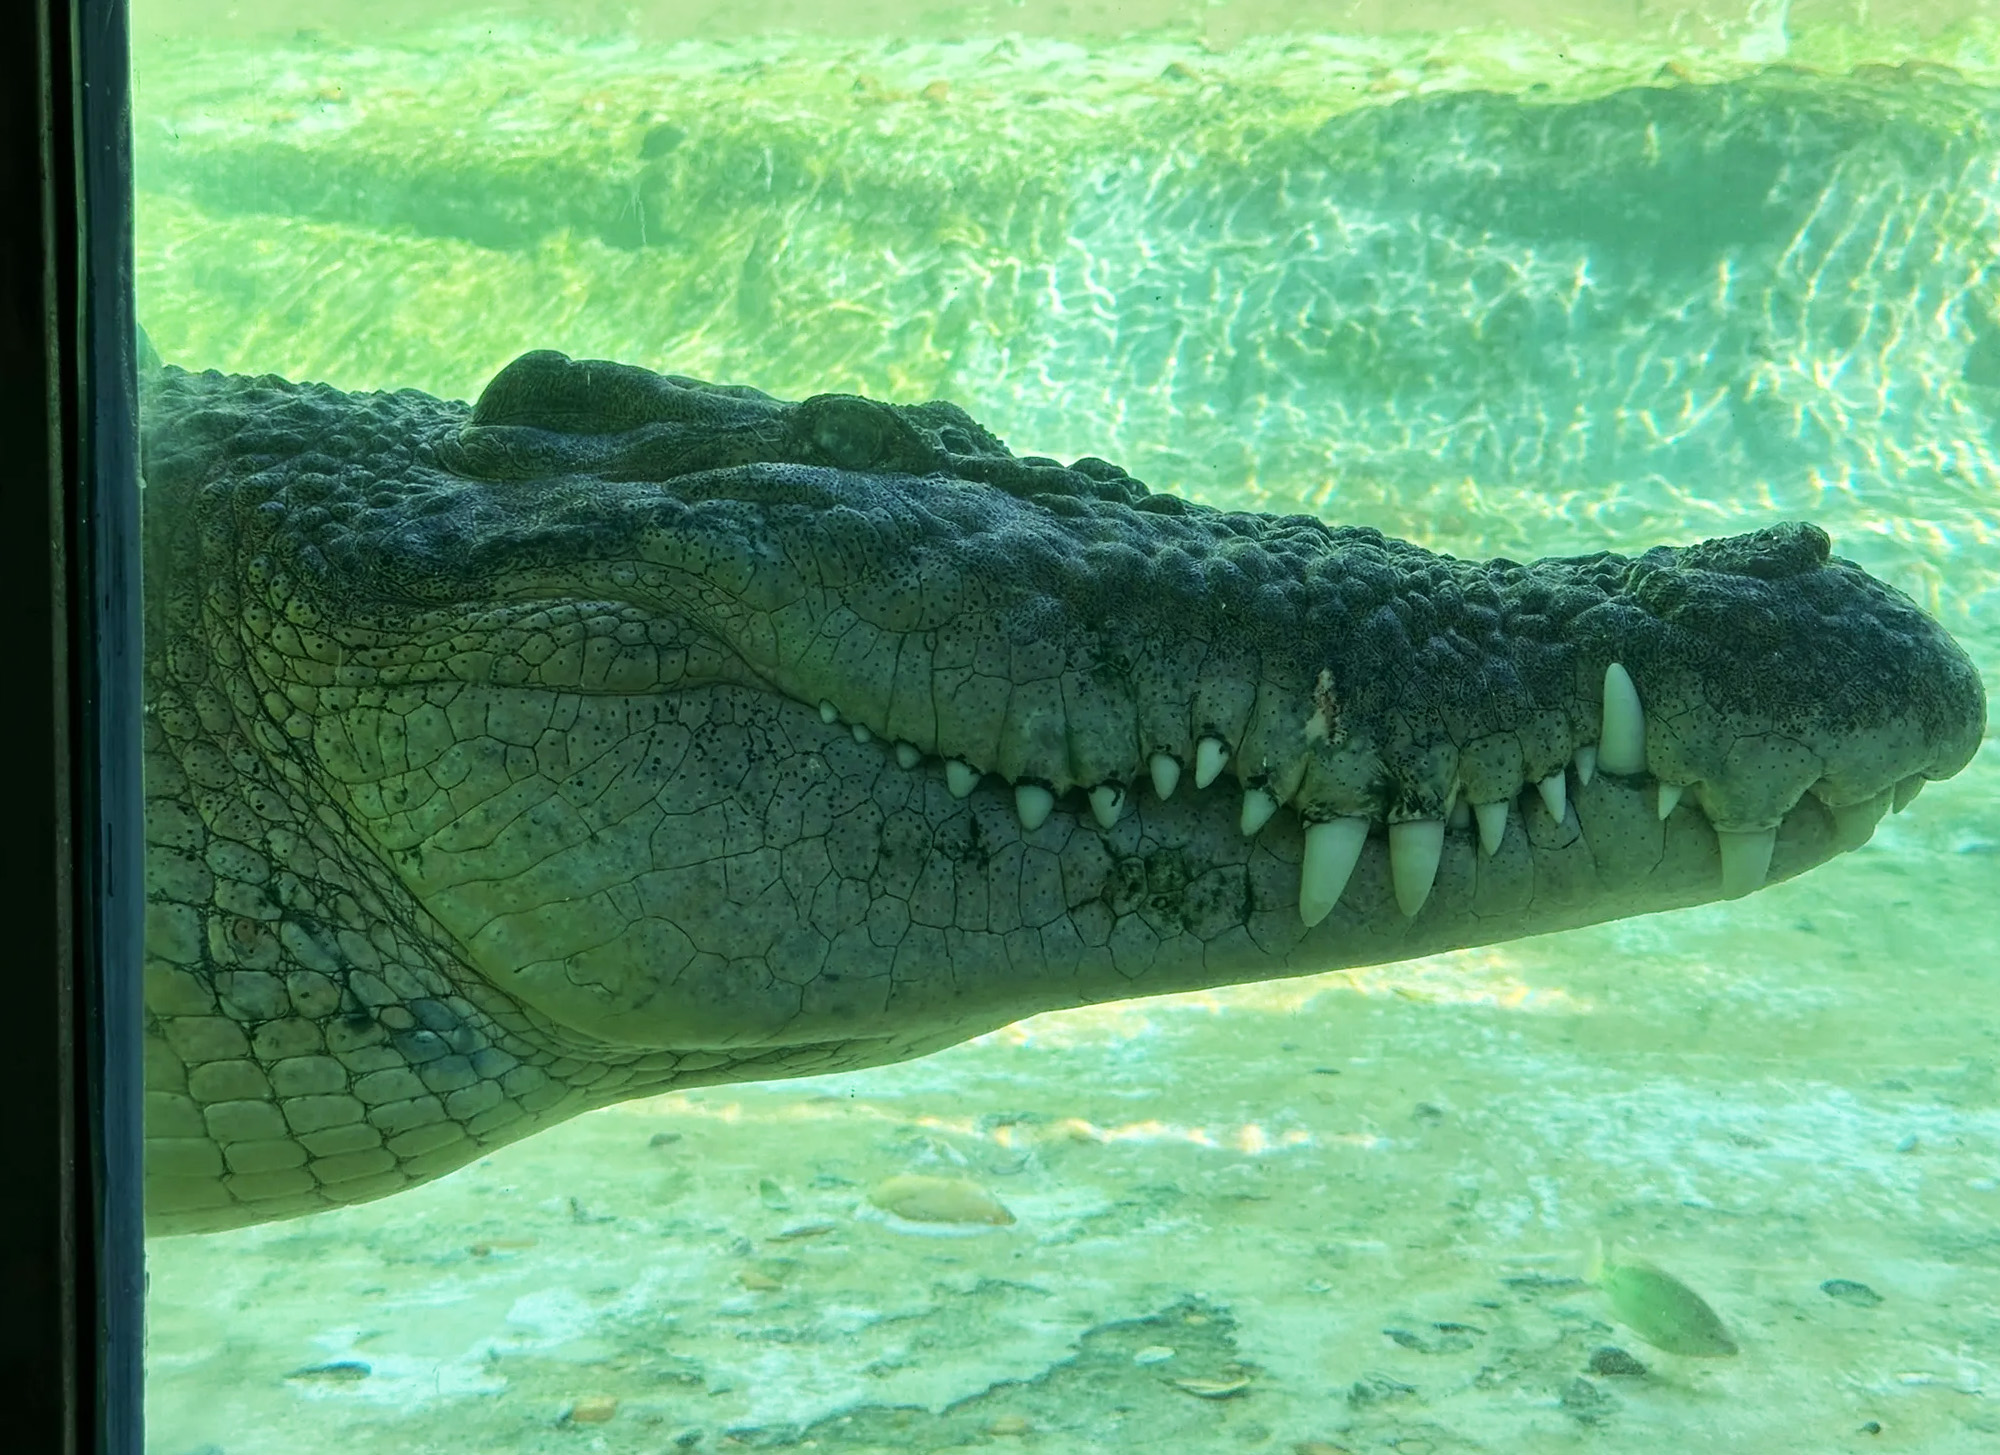 An alligator in water at an alligator farm in Augustine, Florida.